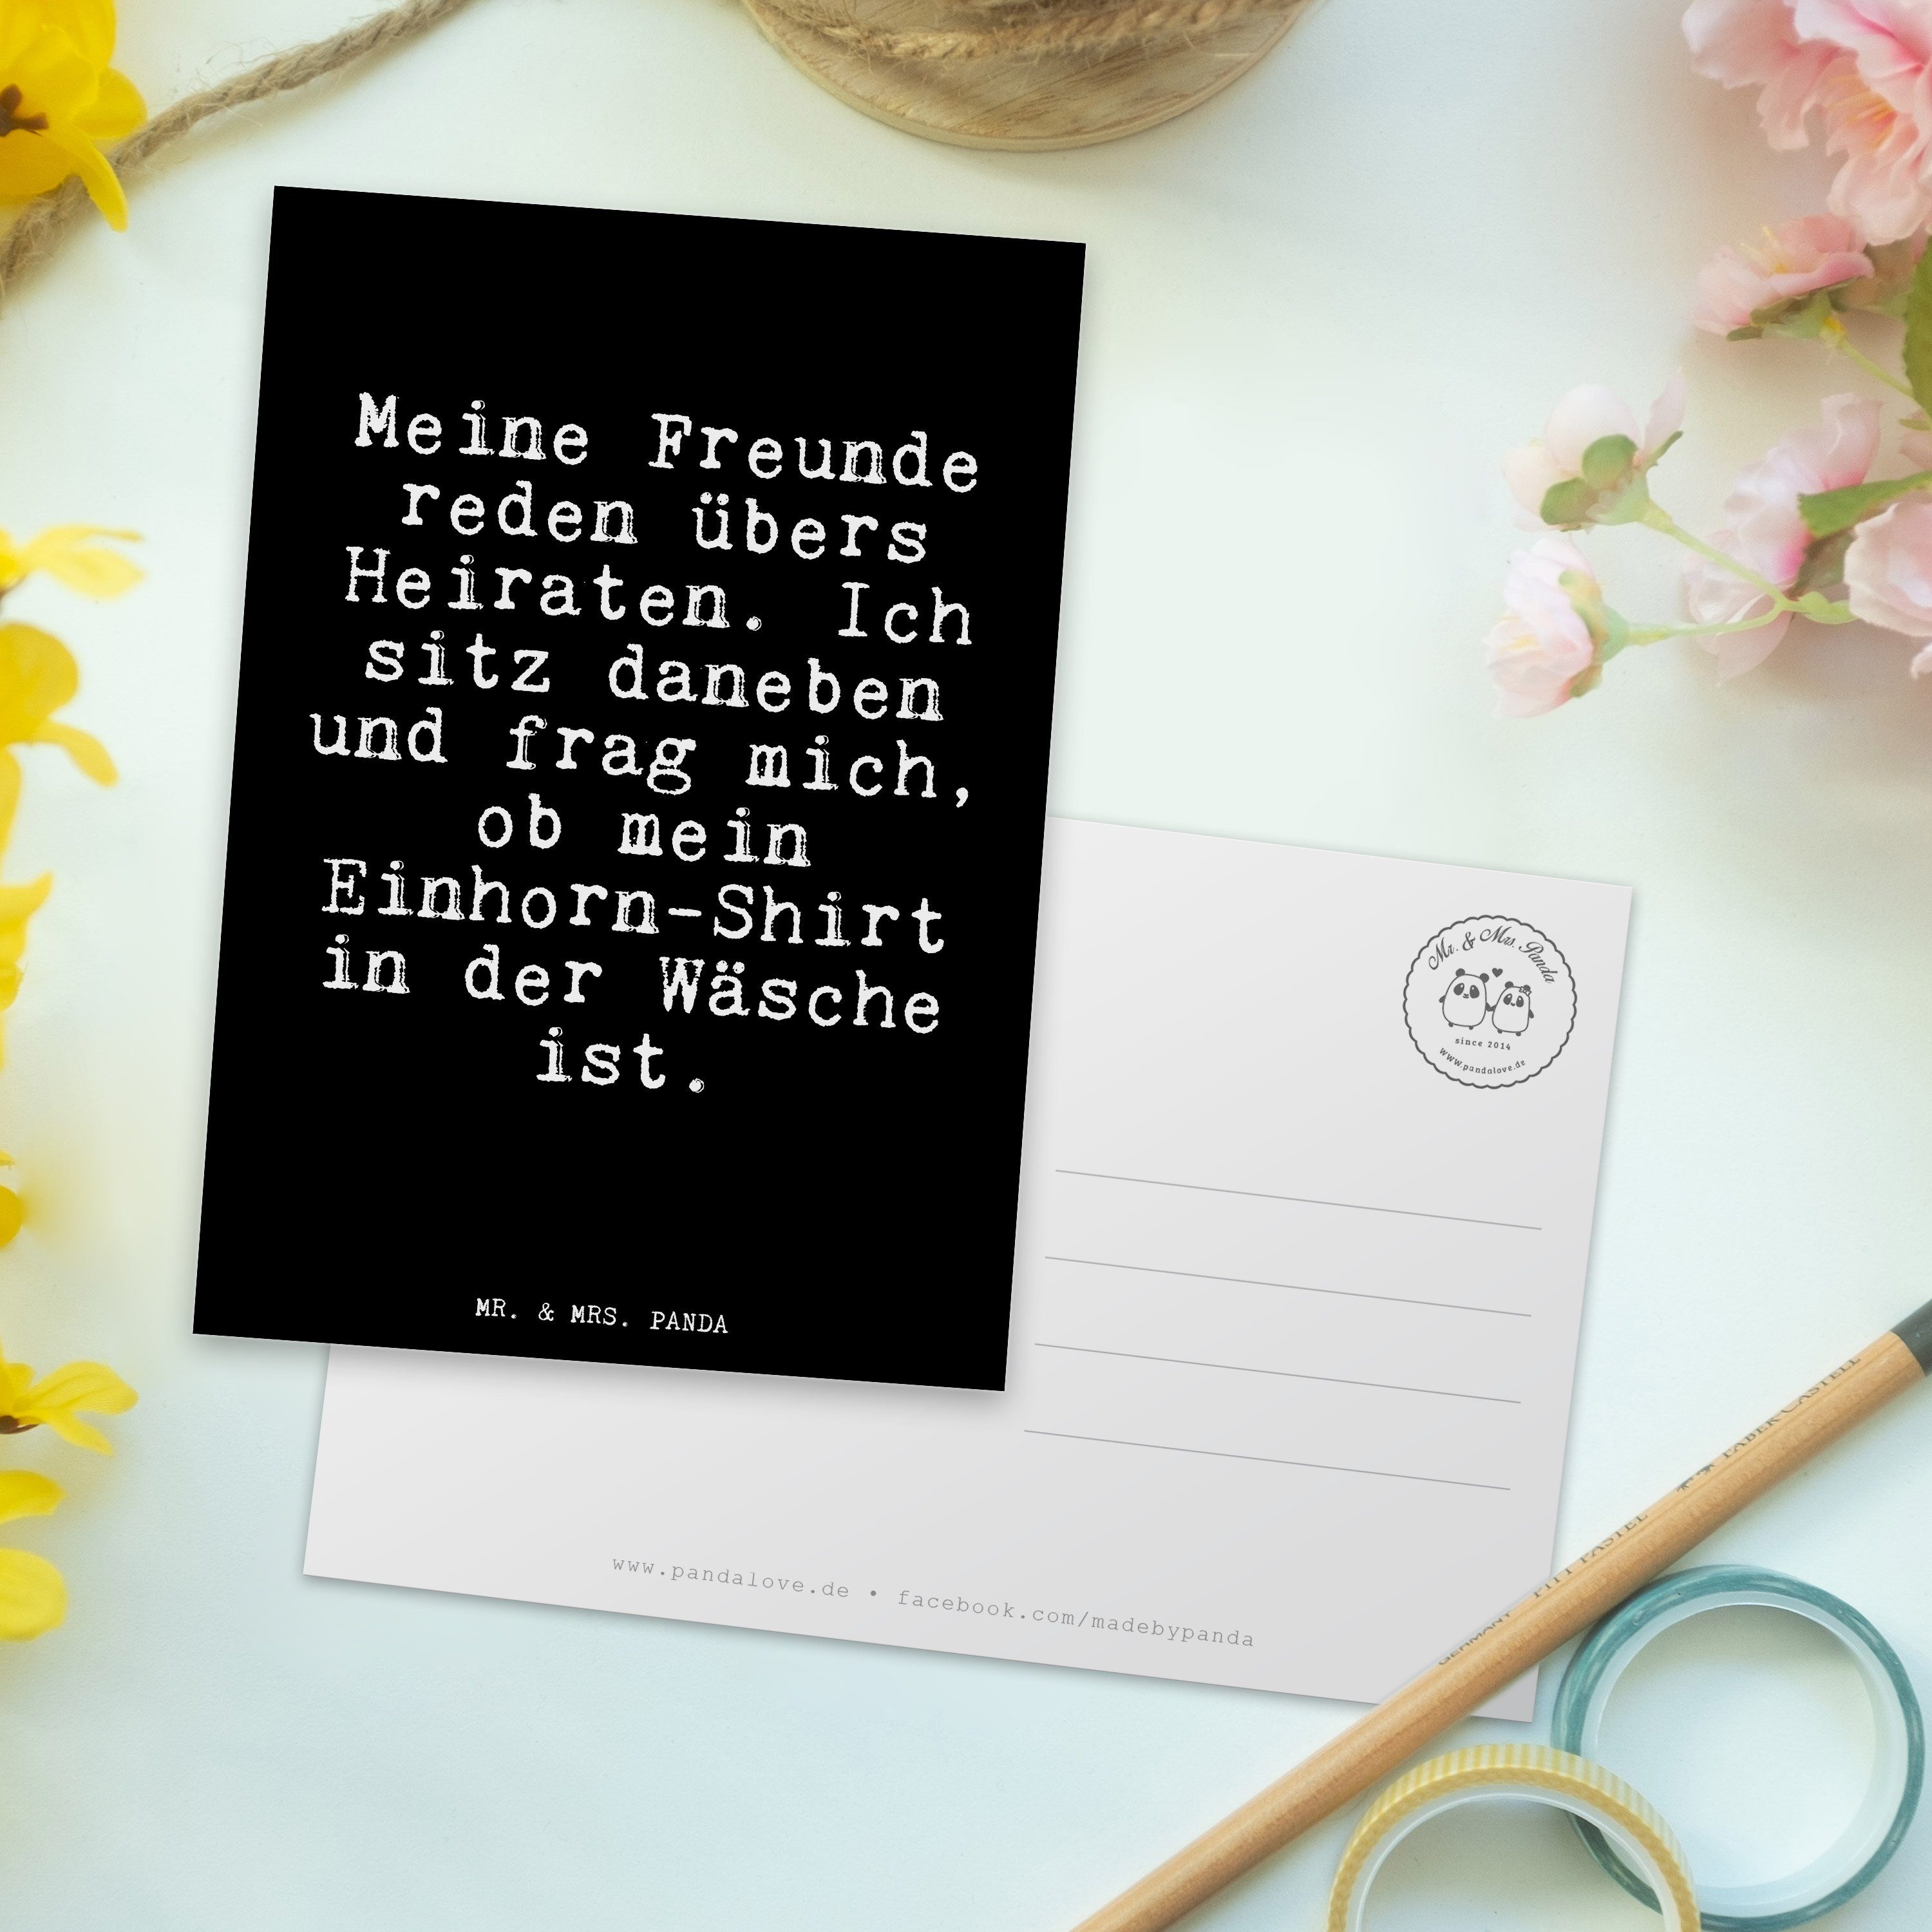 Mr. & Mrs. Panda - Dankeskart Geschenk, Freunde reden Meine Schwarz übers... Postkarte - witzig